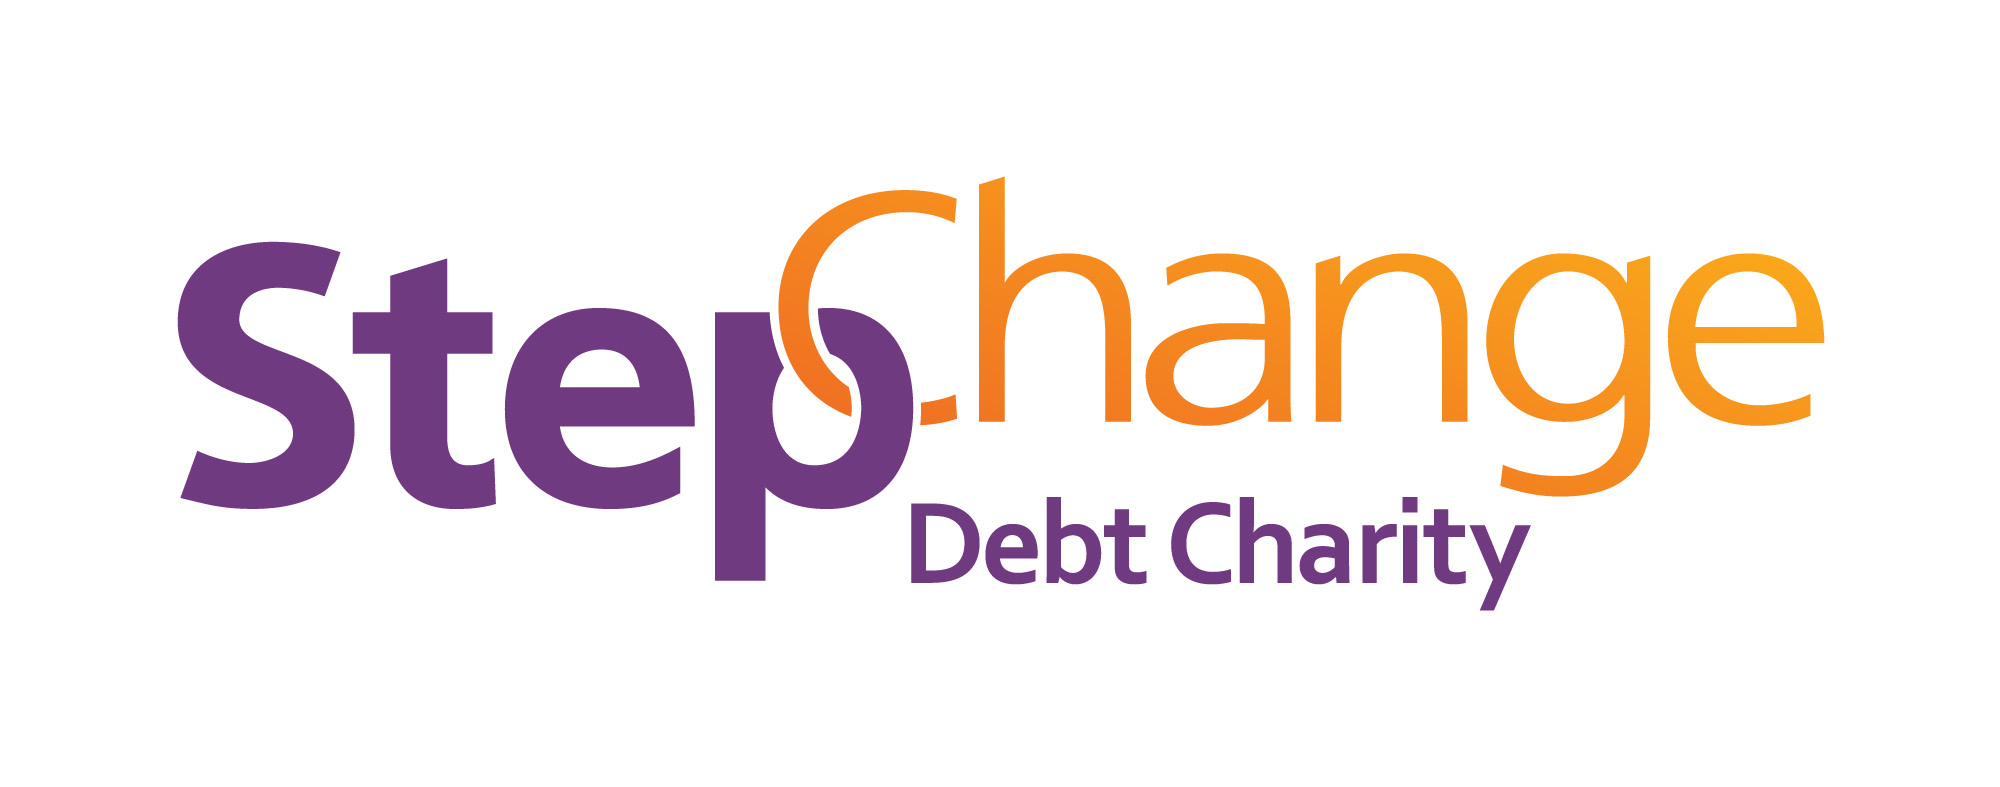 logo for Stepchange Debt Charity